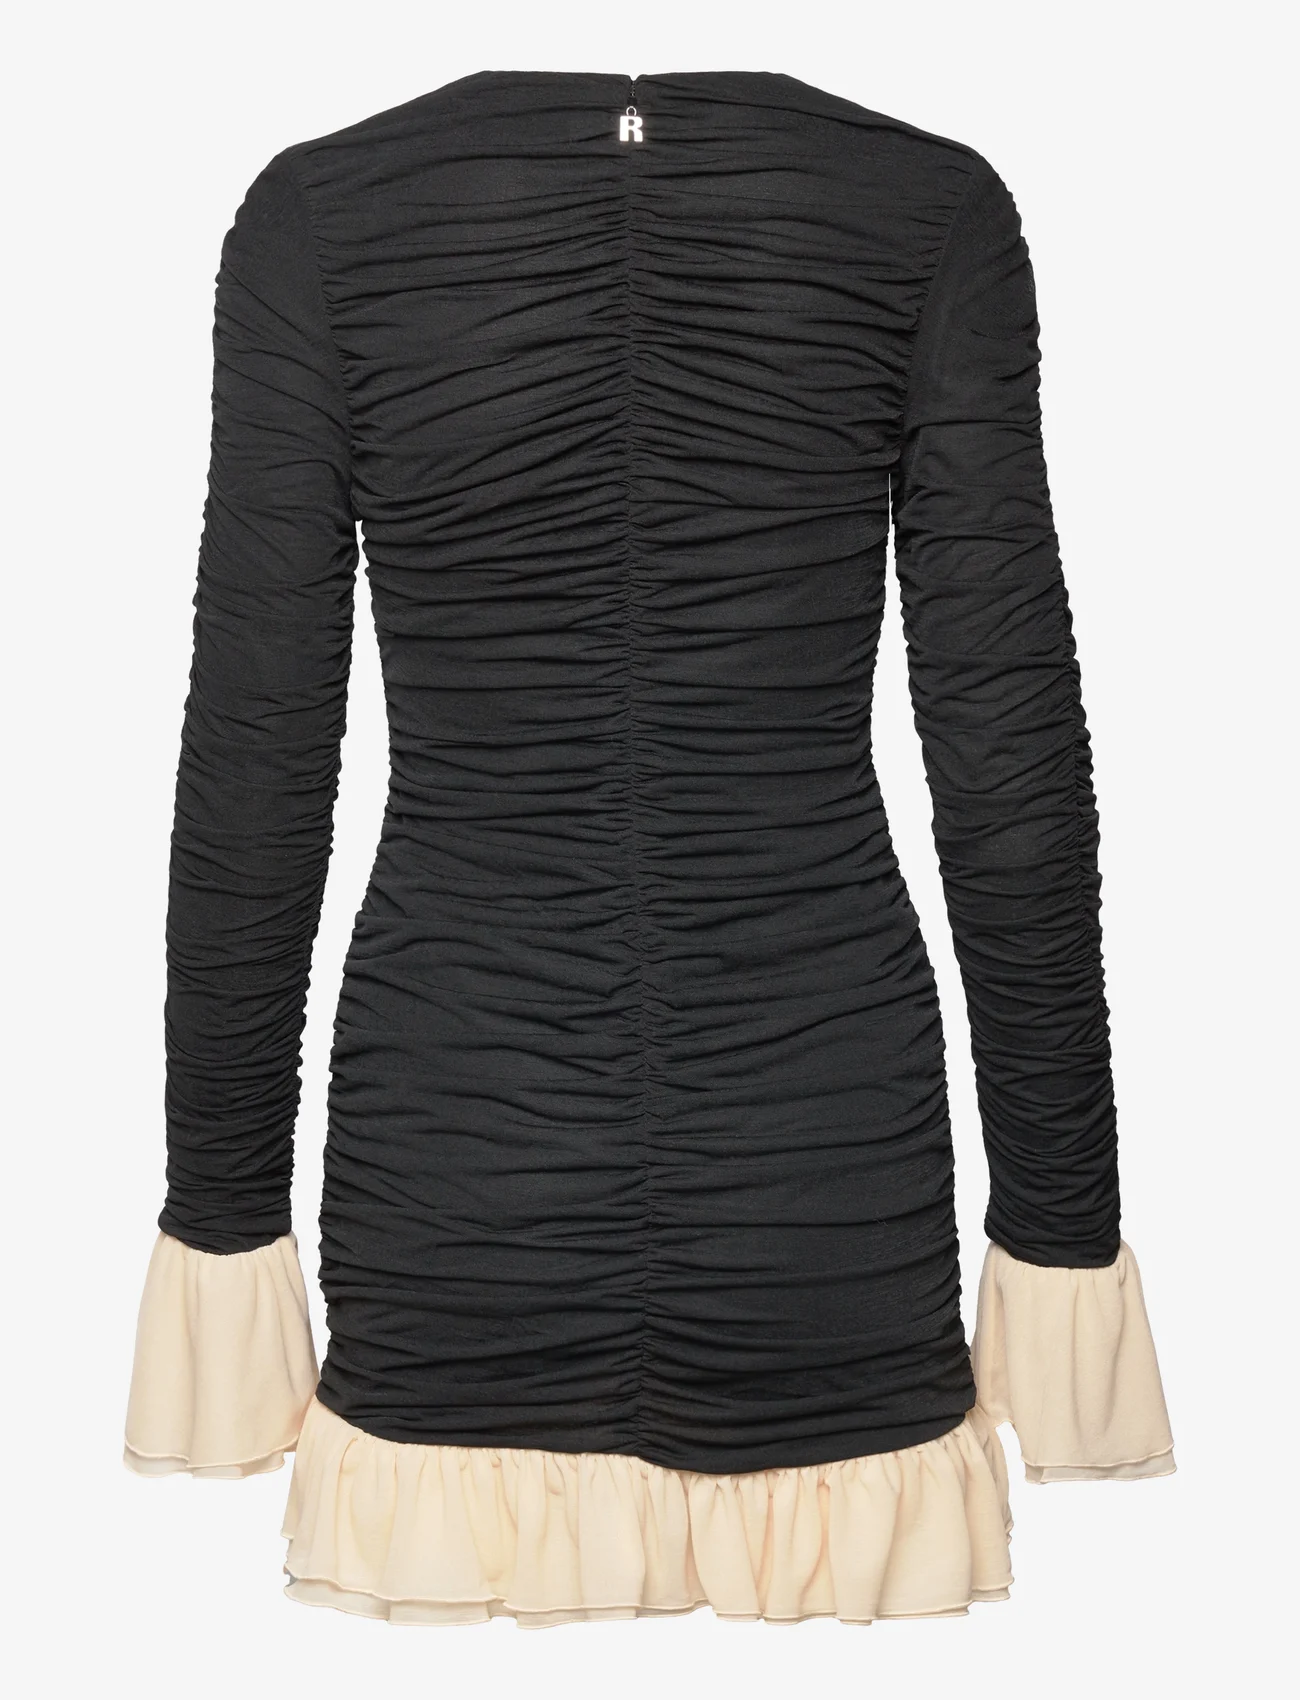 ROTATE Birger Christensen - Mini Ruched Ls Dress - feestelijke kleding voor outlet-prijzen - 1000 black comb. - 1